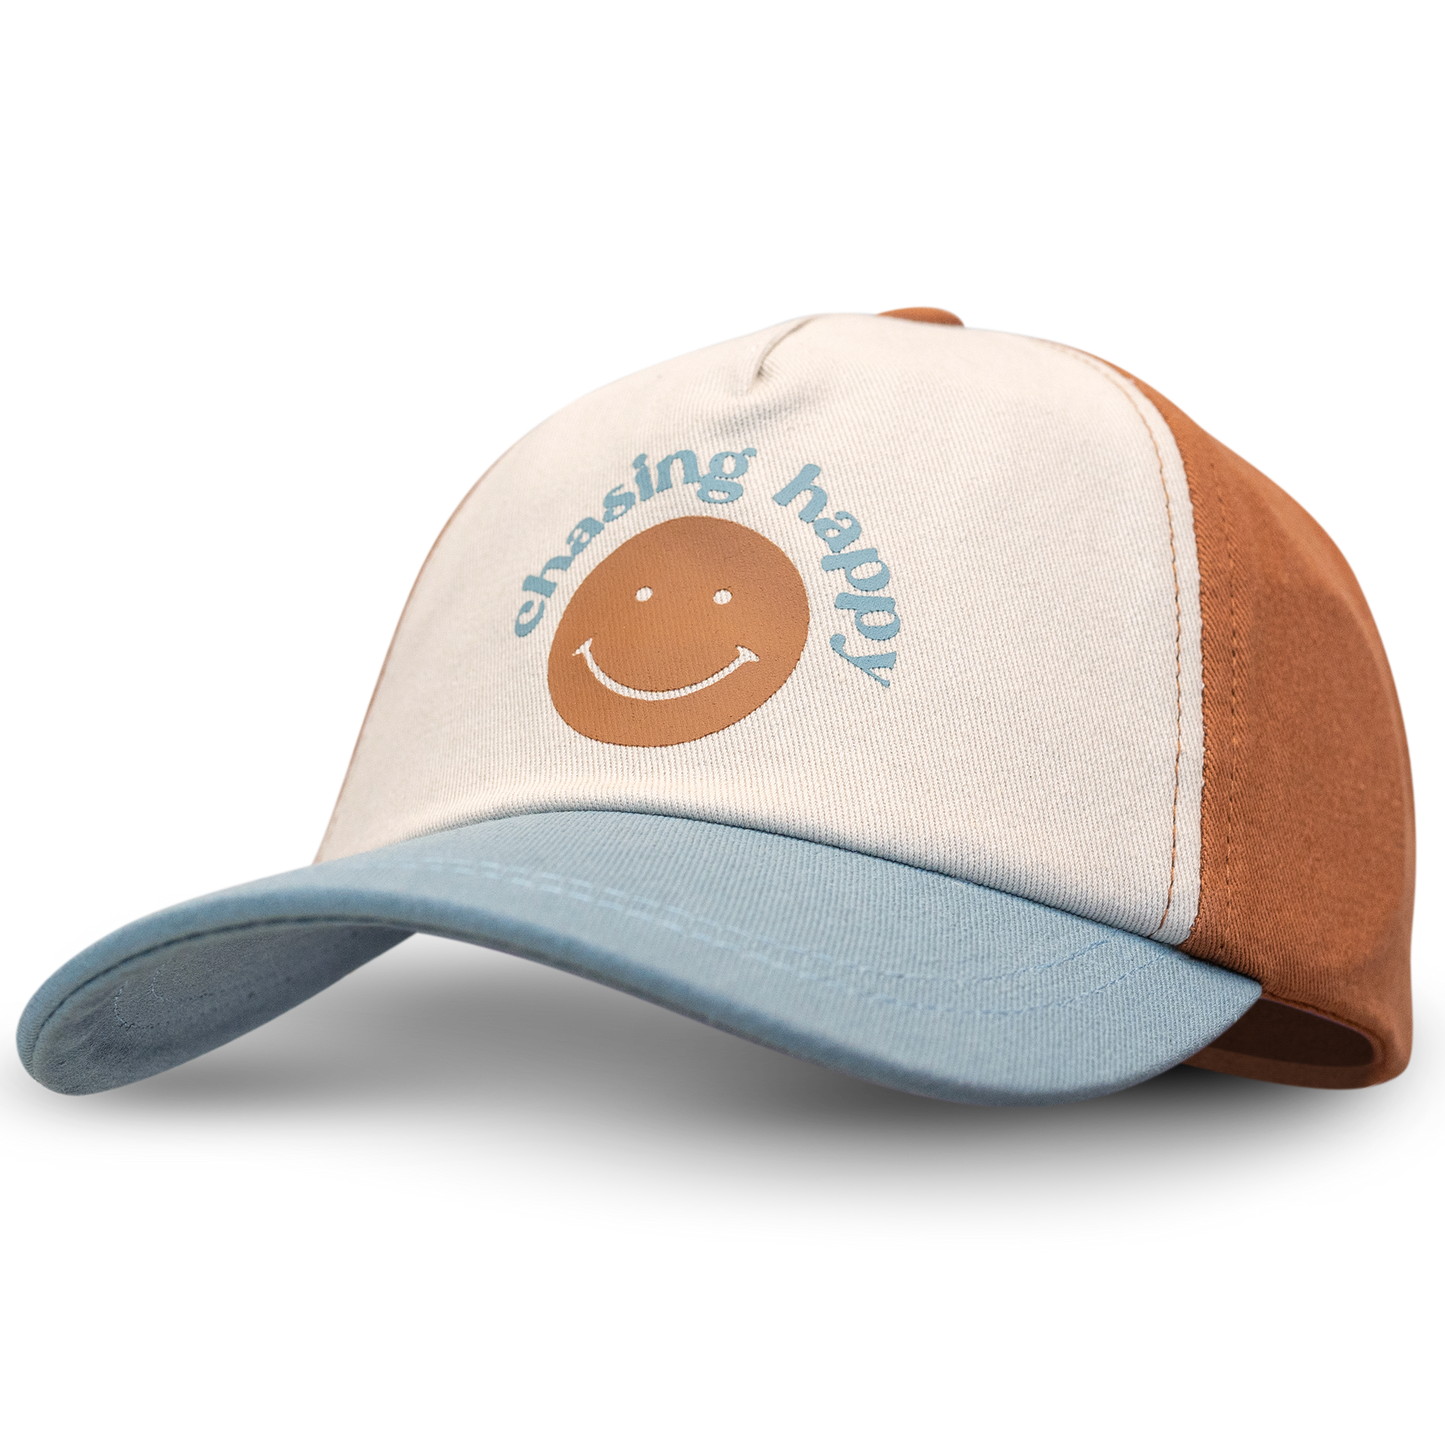 Chasing Happy - Adult Ball Cap